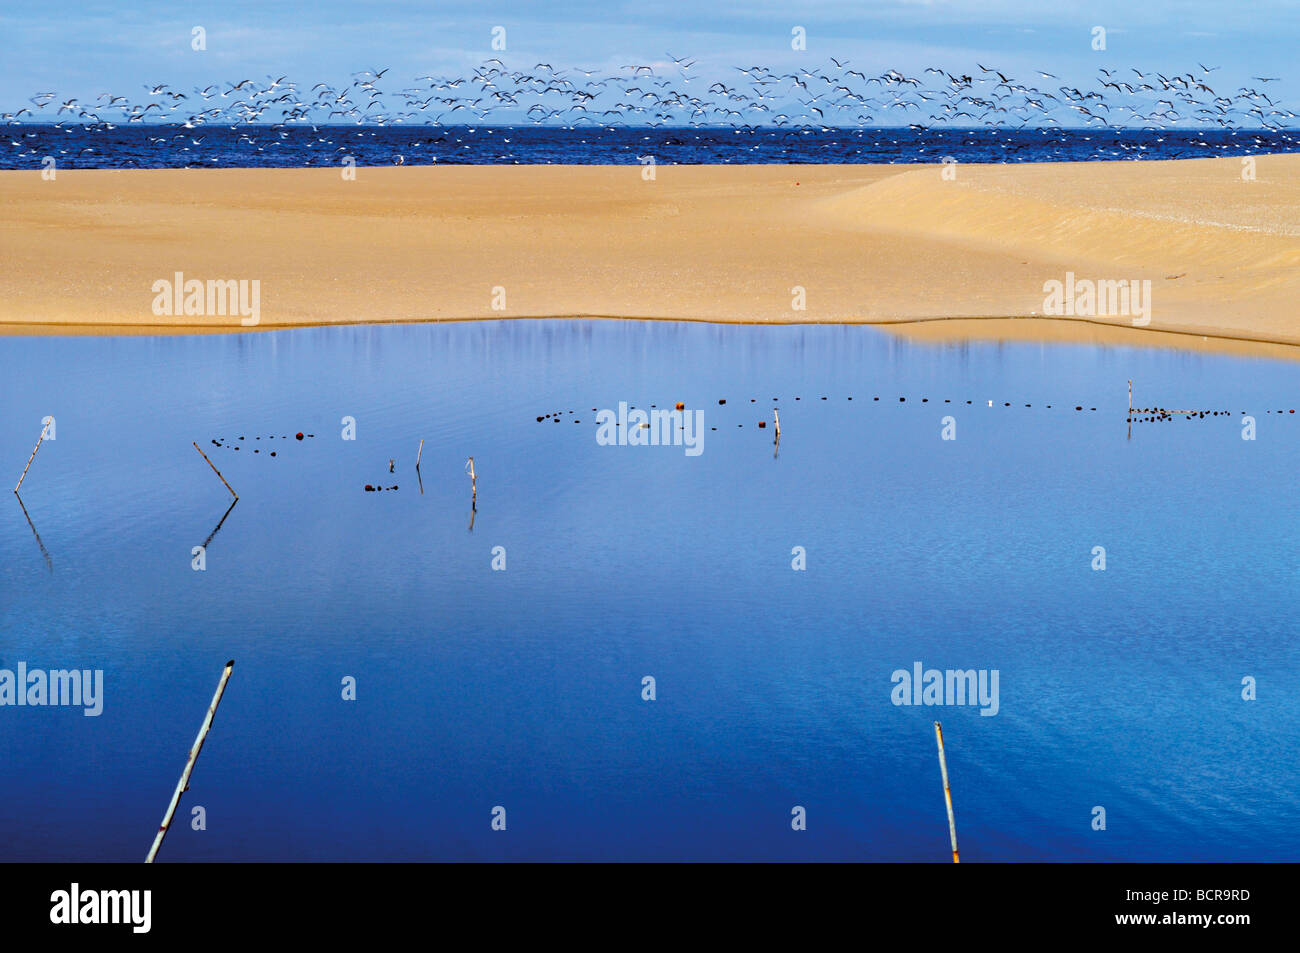 Portugal, Alentejo: Dunes and lagoons at the beach Praia de Melides Stock Photo